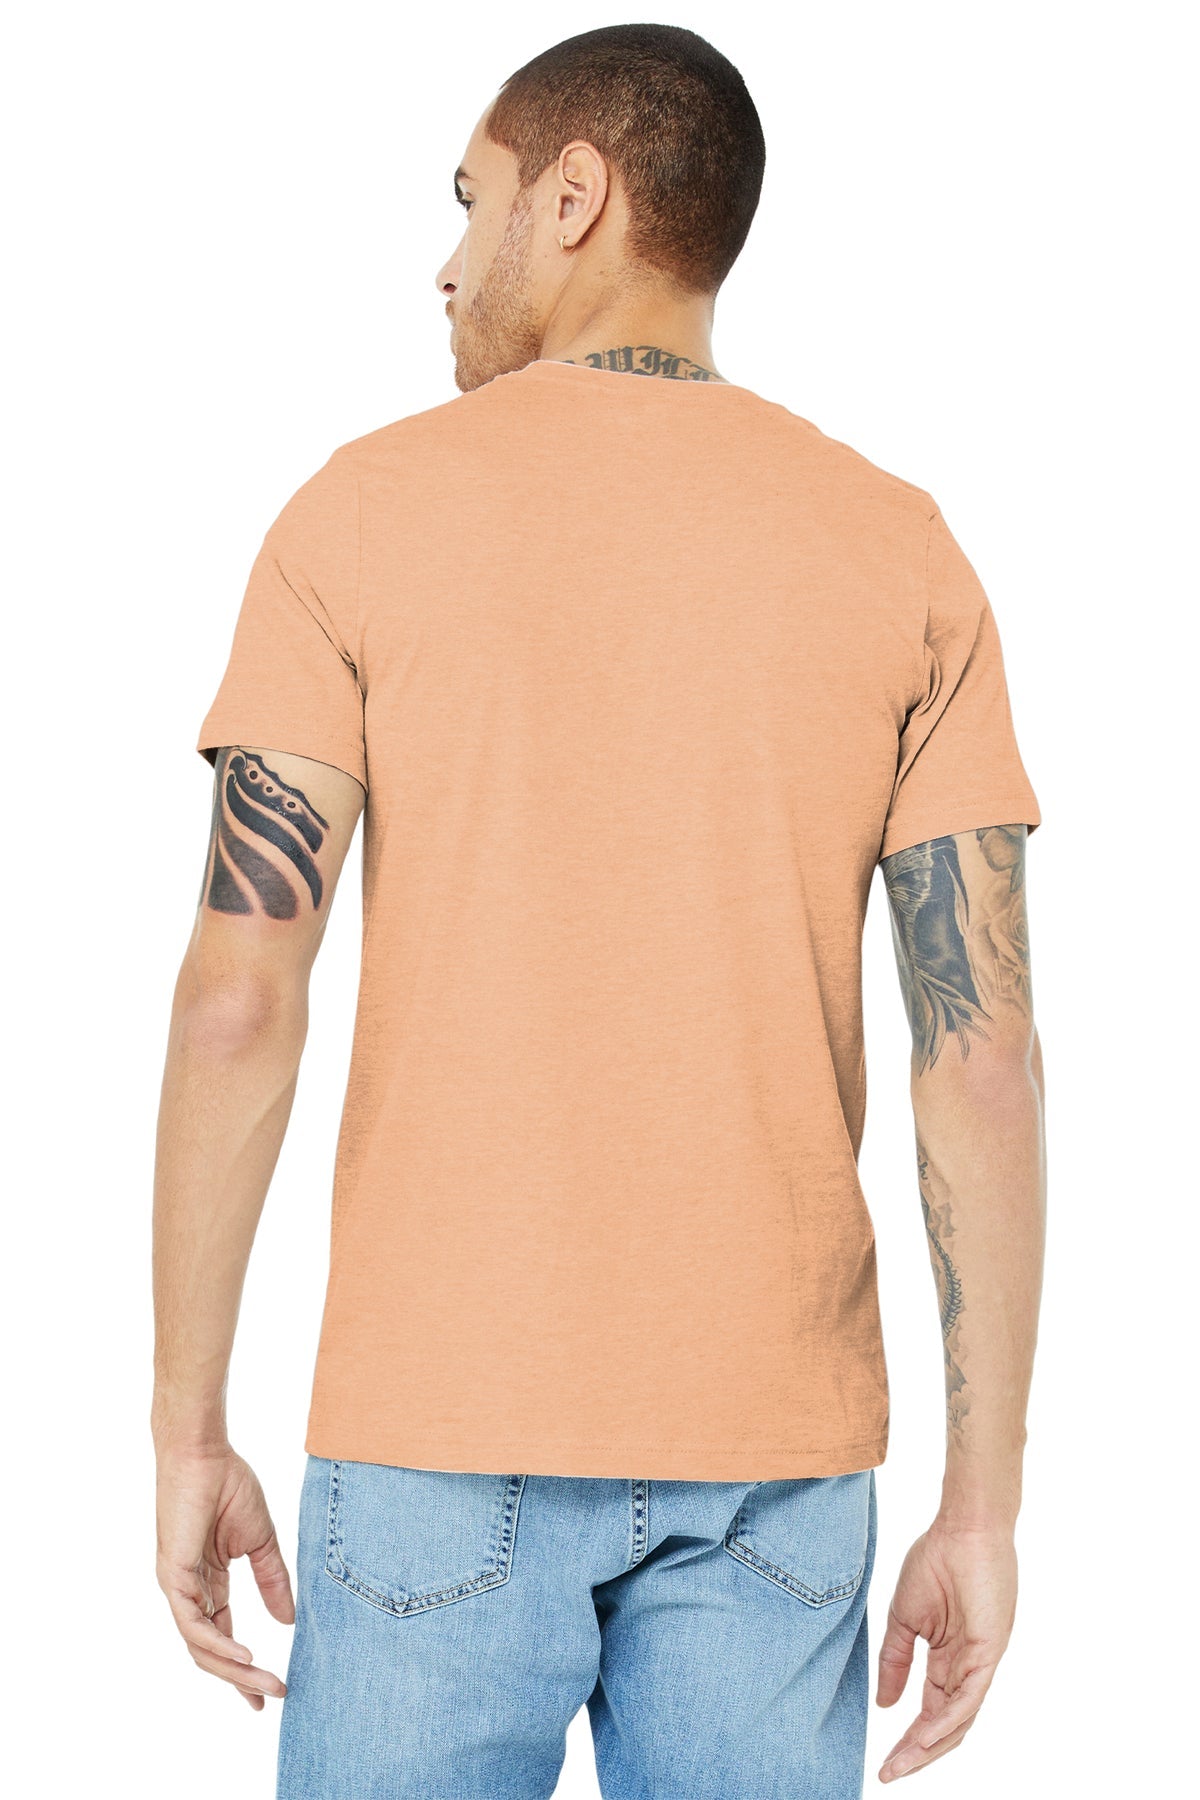 bella + canvas unisex jersey short sleeve t-shirt 3001c heather peach